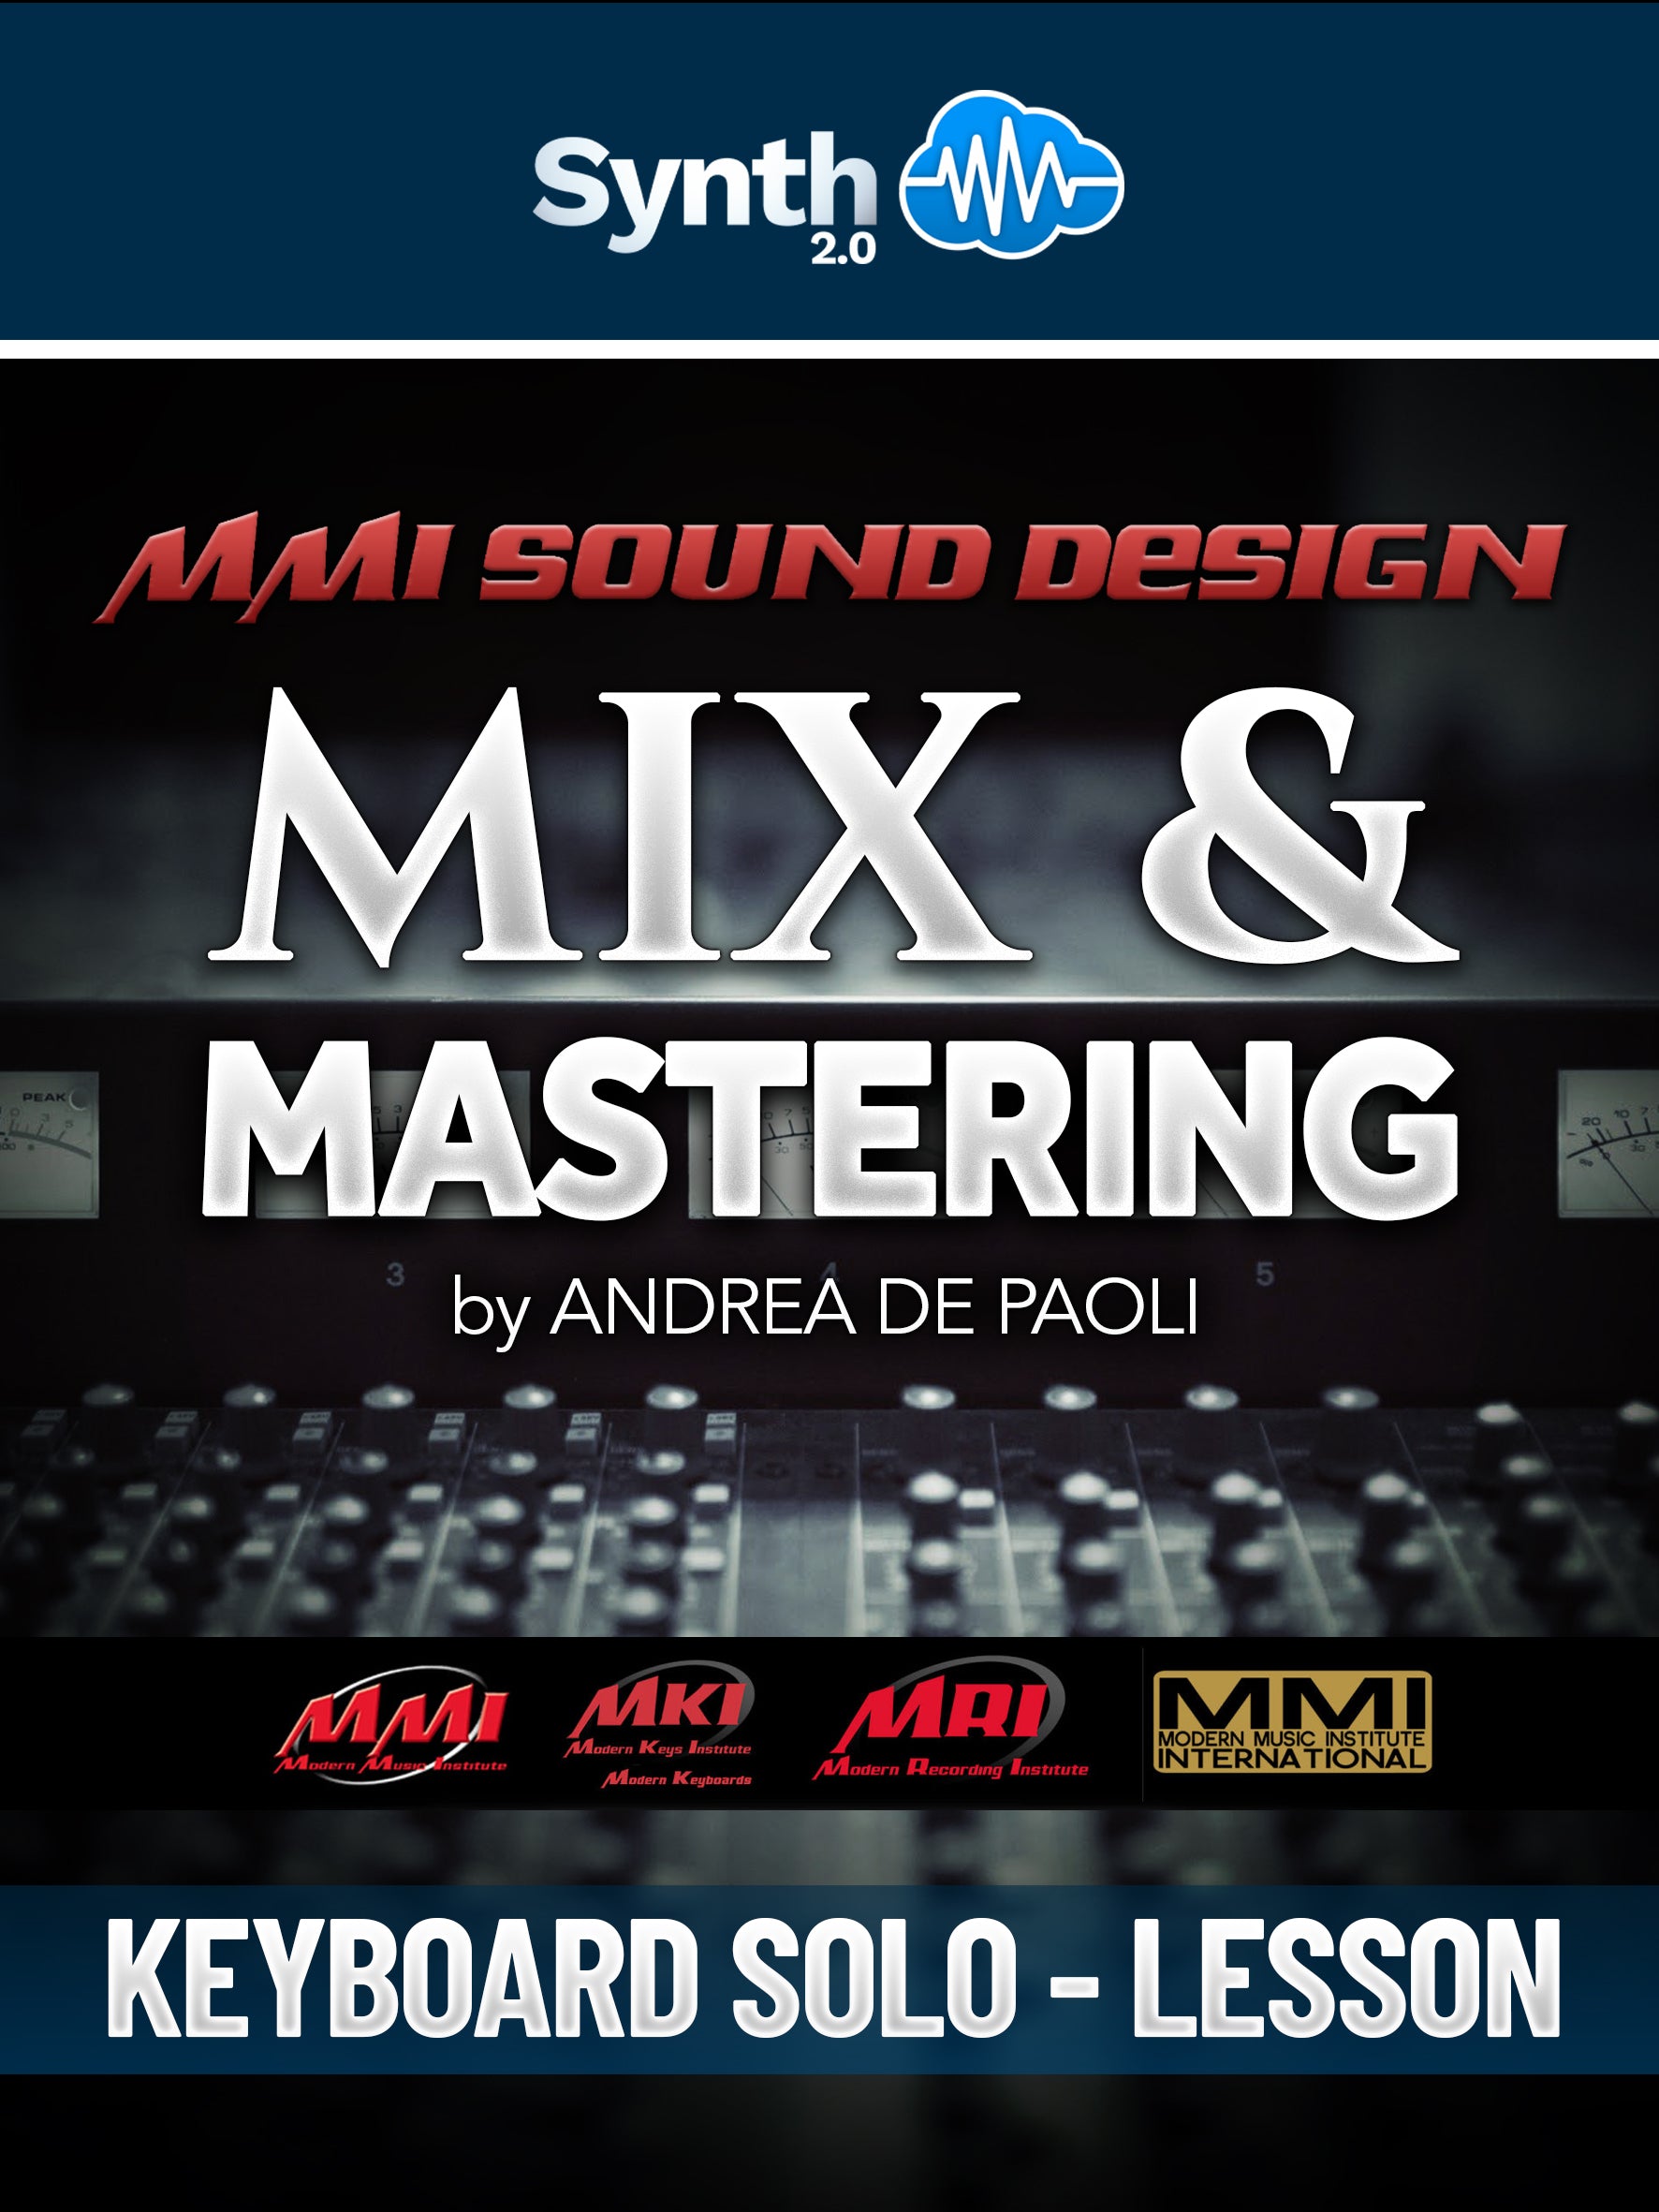 MMI007 - Modern Keyboard - Mixing & Mastering Lessons